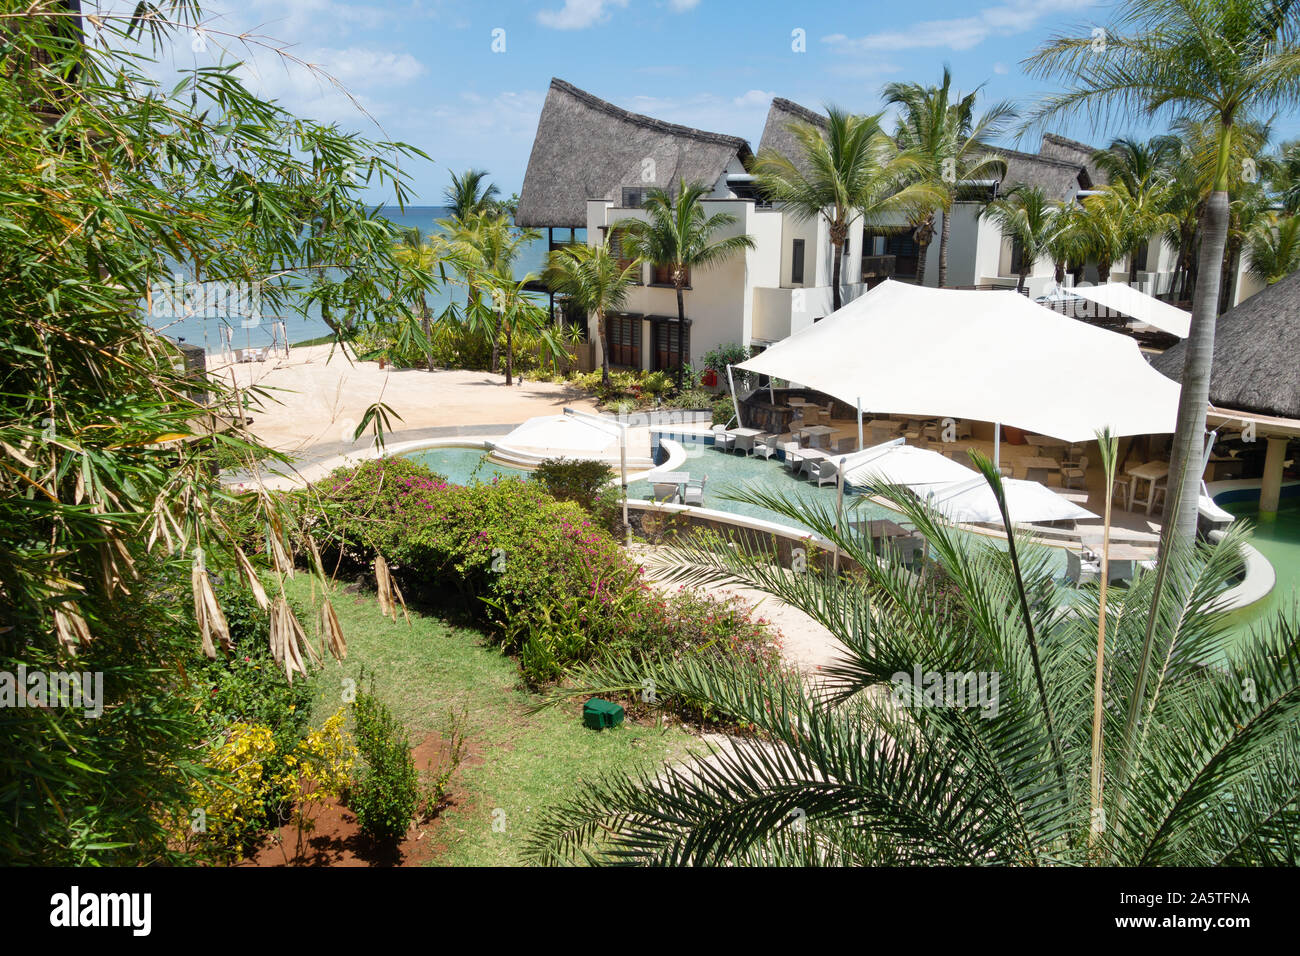 Balaclava mauritius hotel hi-res stock photography and images - Alamy